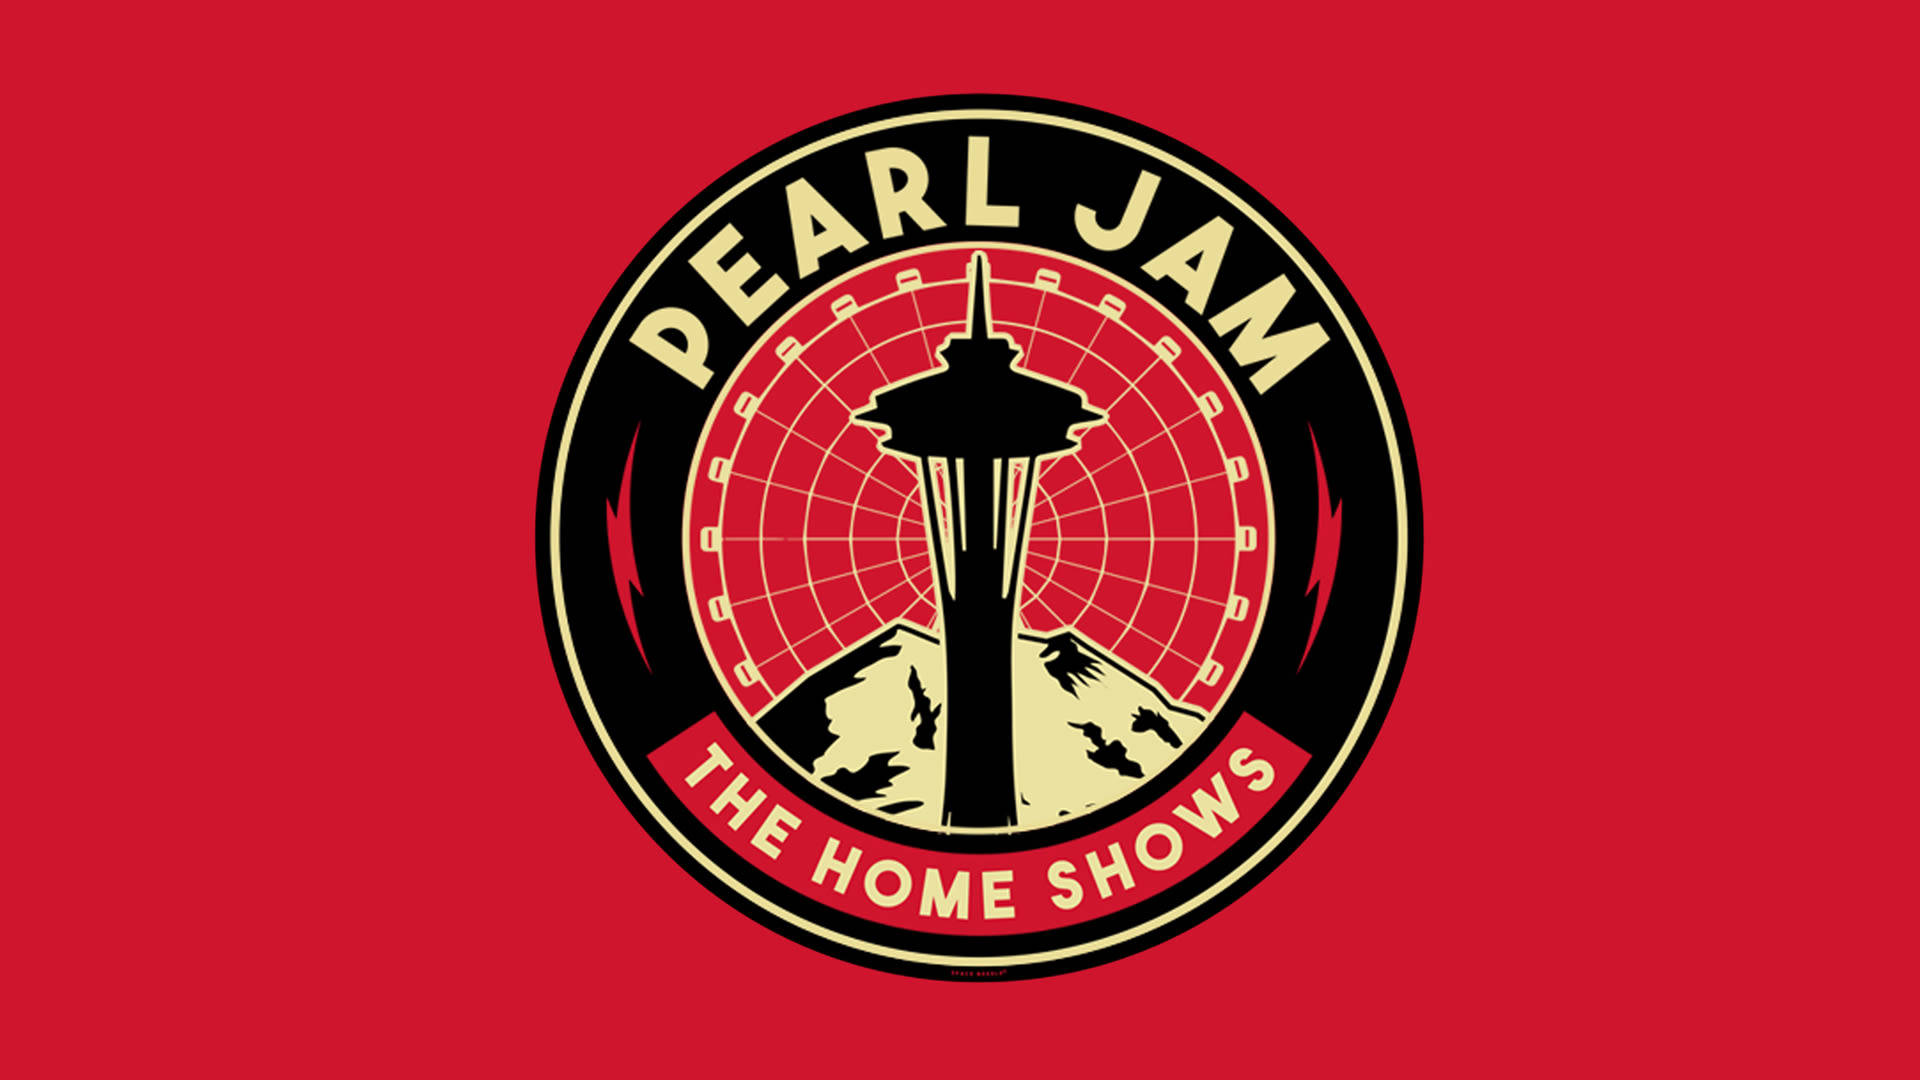 Pearljam Rock Band Musikshow Wallpaper